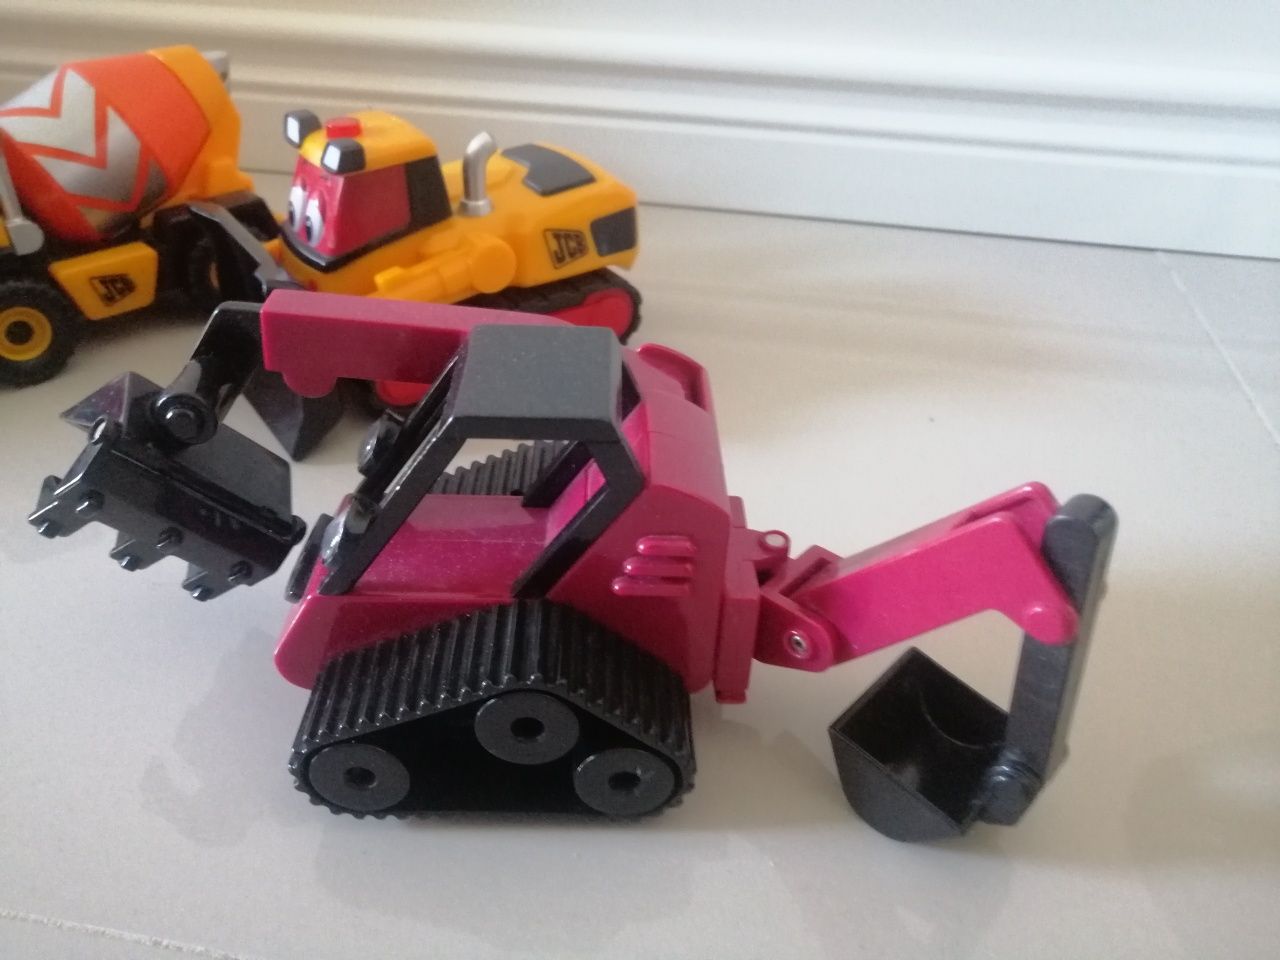 Samochody budowa zabawki